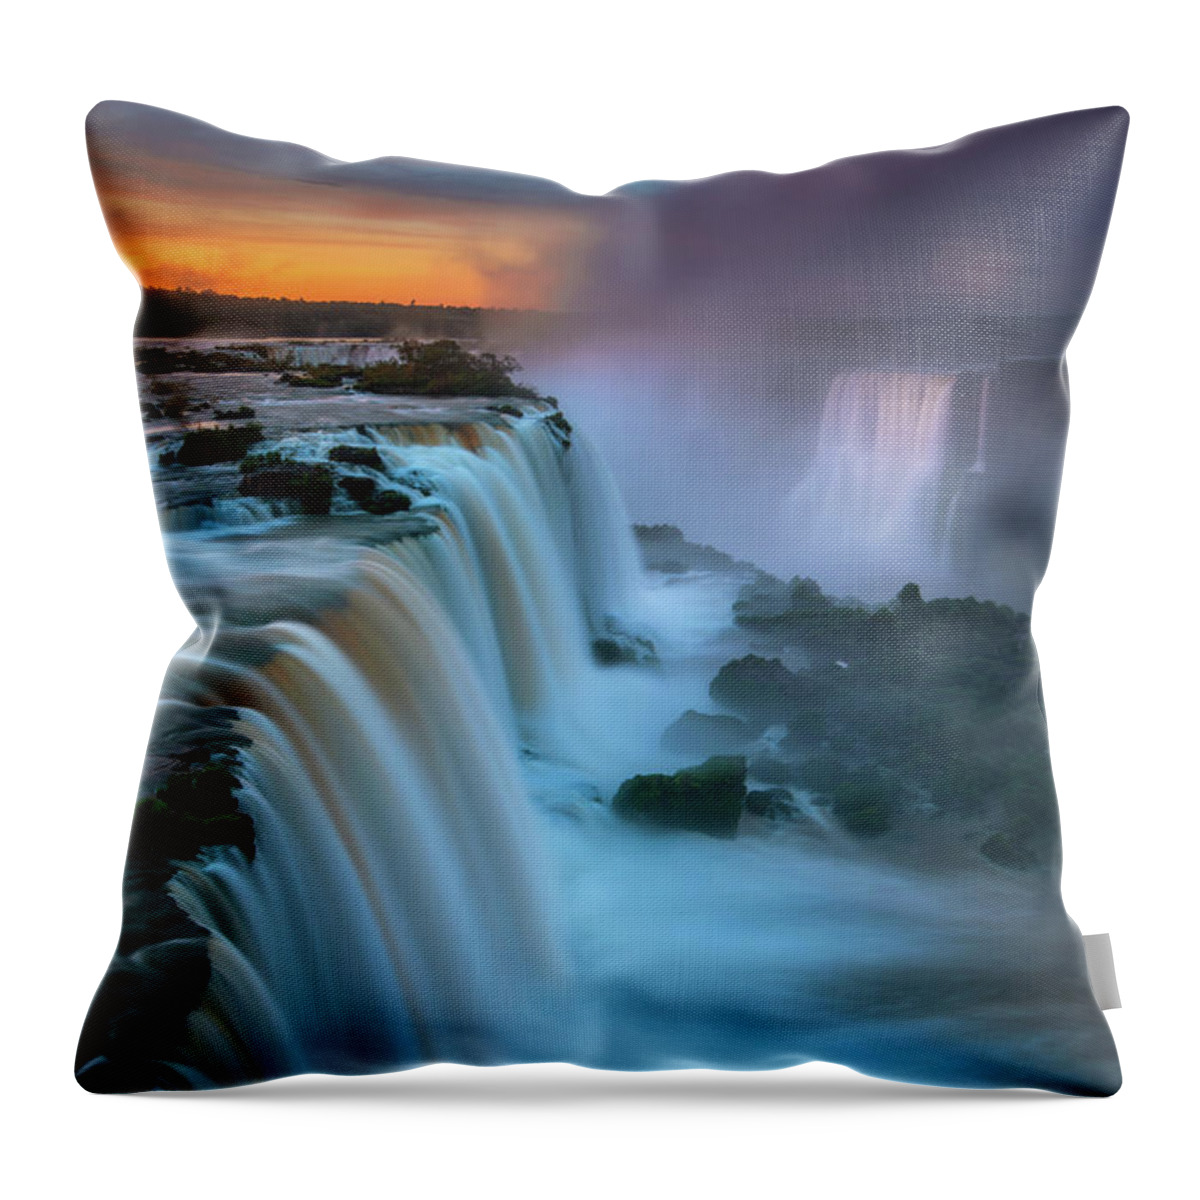 Seascape Throw Pillow featuring the photograph Iguazu Falls #1 by Piriya Photography